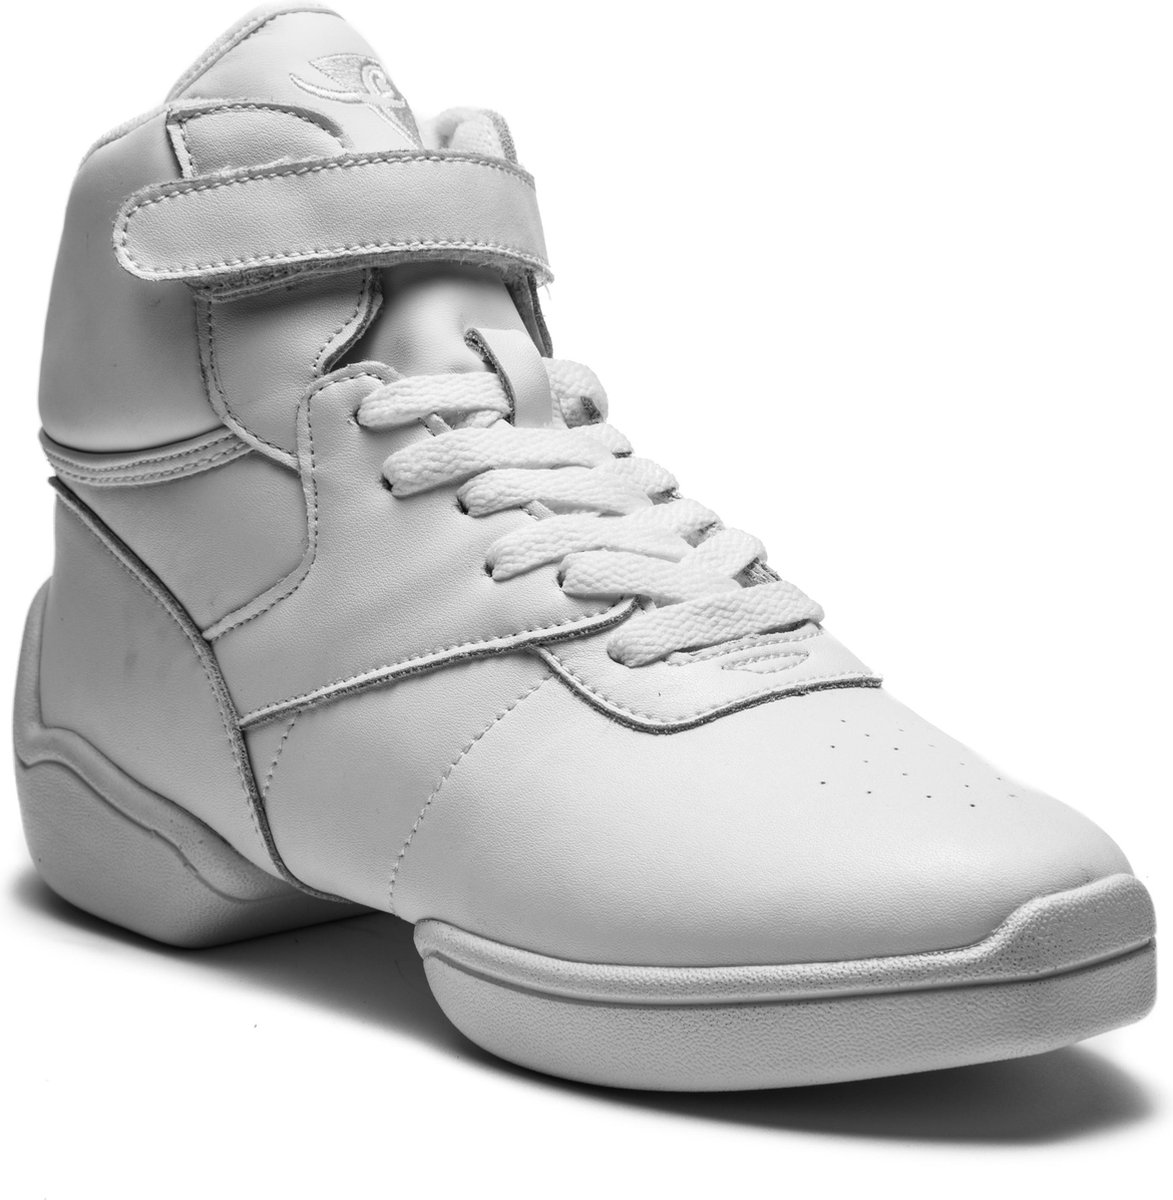 Rumpf 1500 High Top Sneaker Leather upper white Jazz Street Hip Hop wit Maat 41.5, UK 7.5